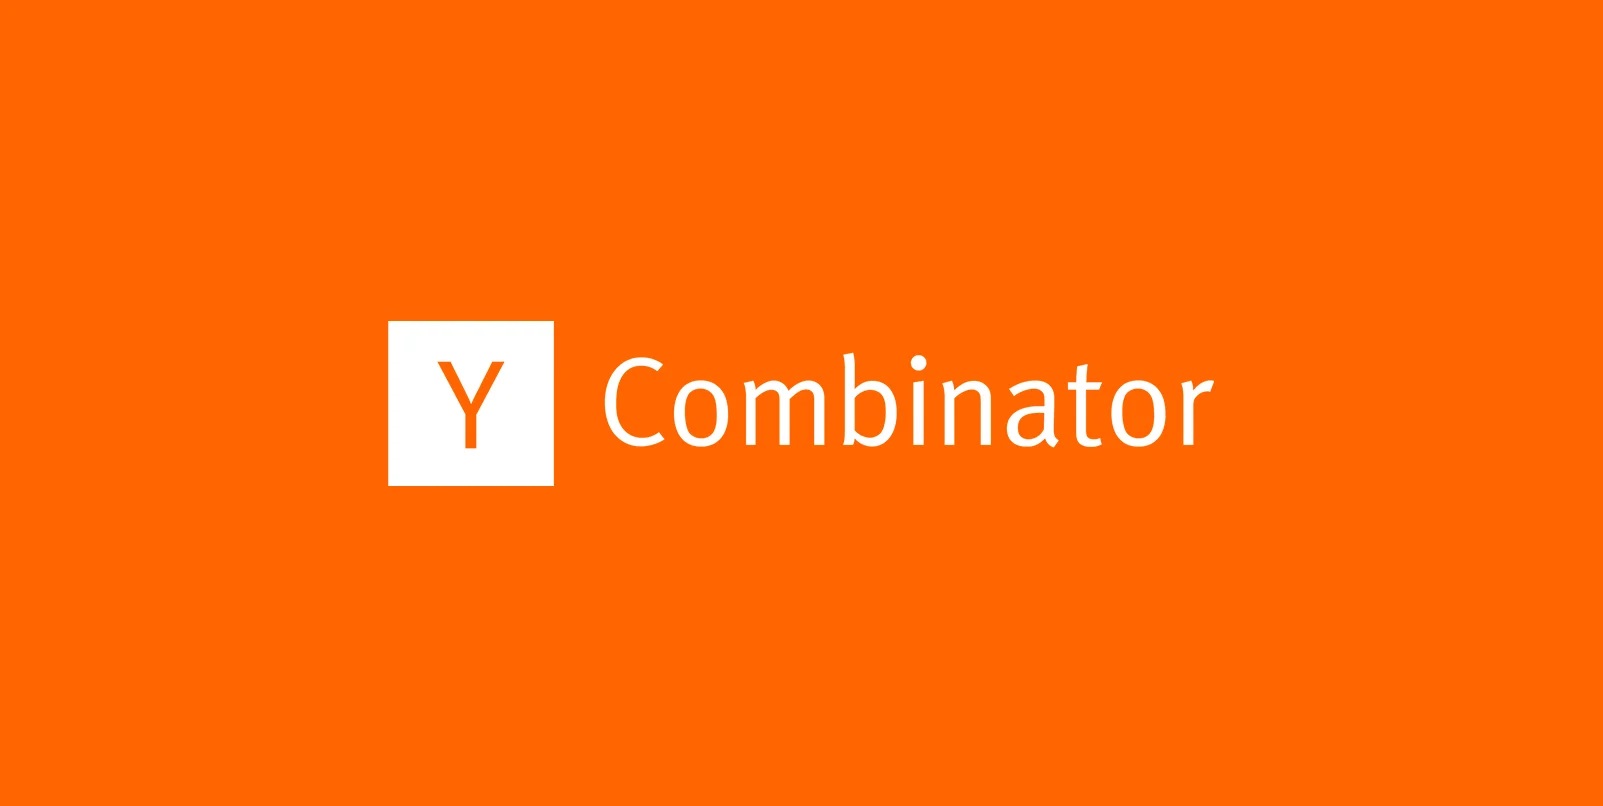 Y Combinator Strengthens Leadership Team With New Lieutenants